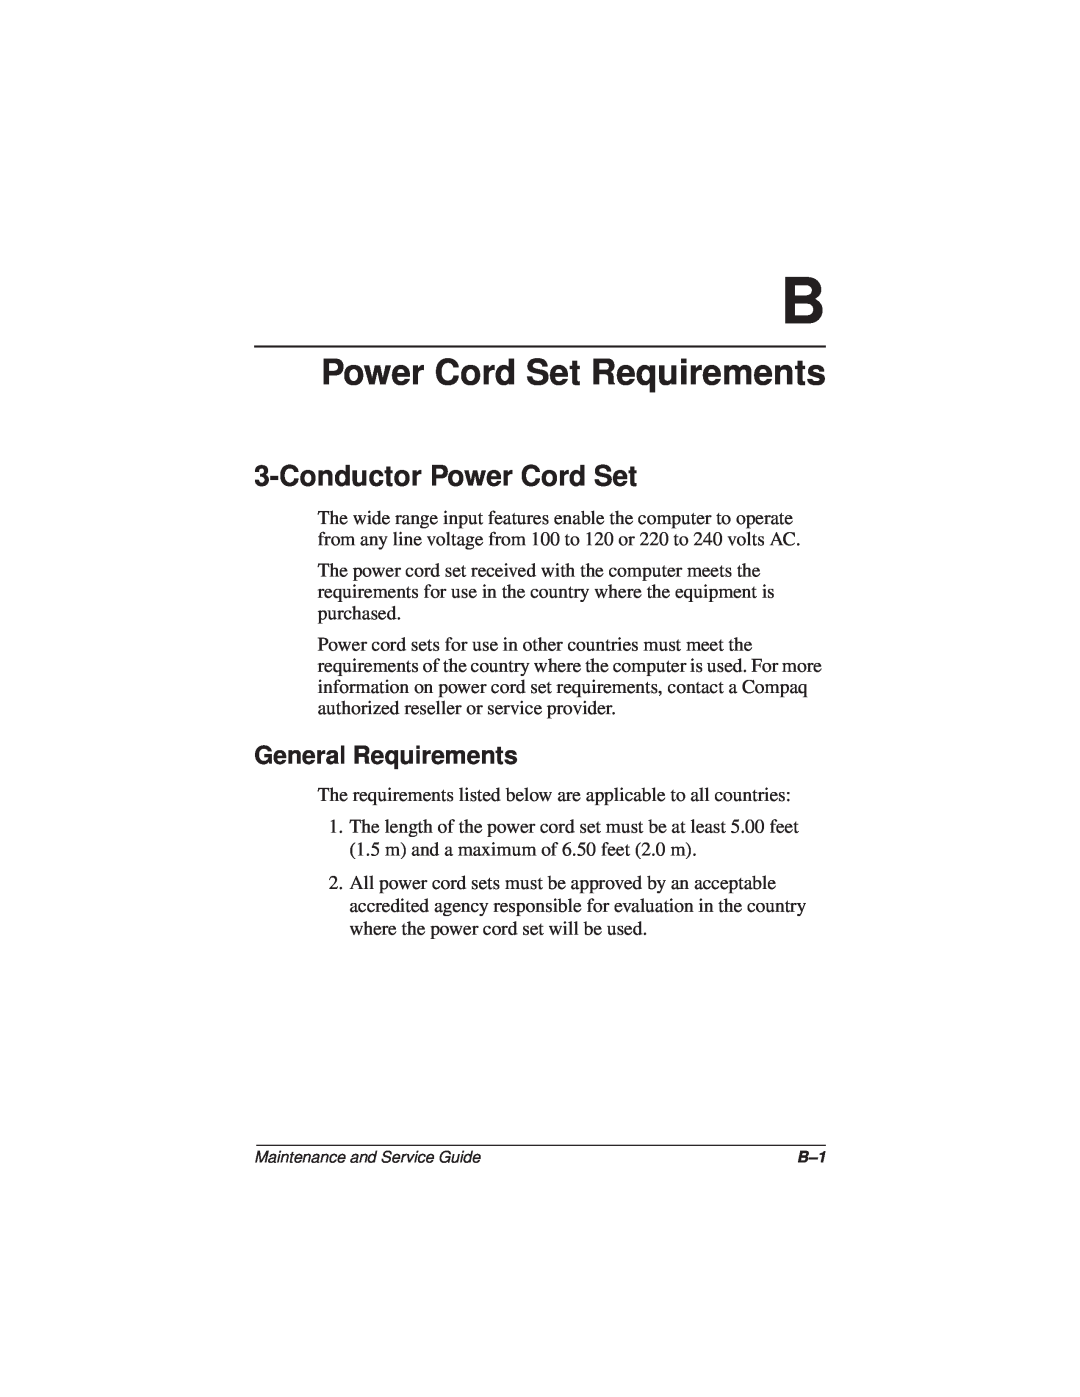 Compaq N110 manual Power Cord Set Requirements, Conductor Power Cord Set, General Requirements 